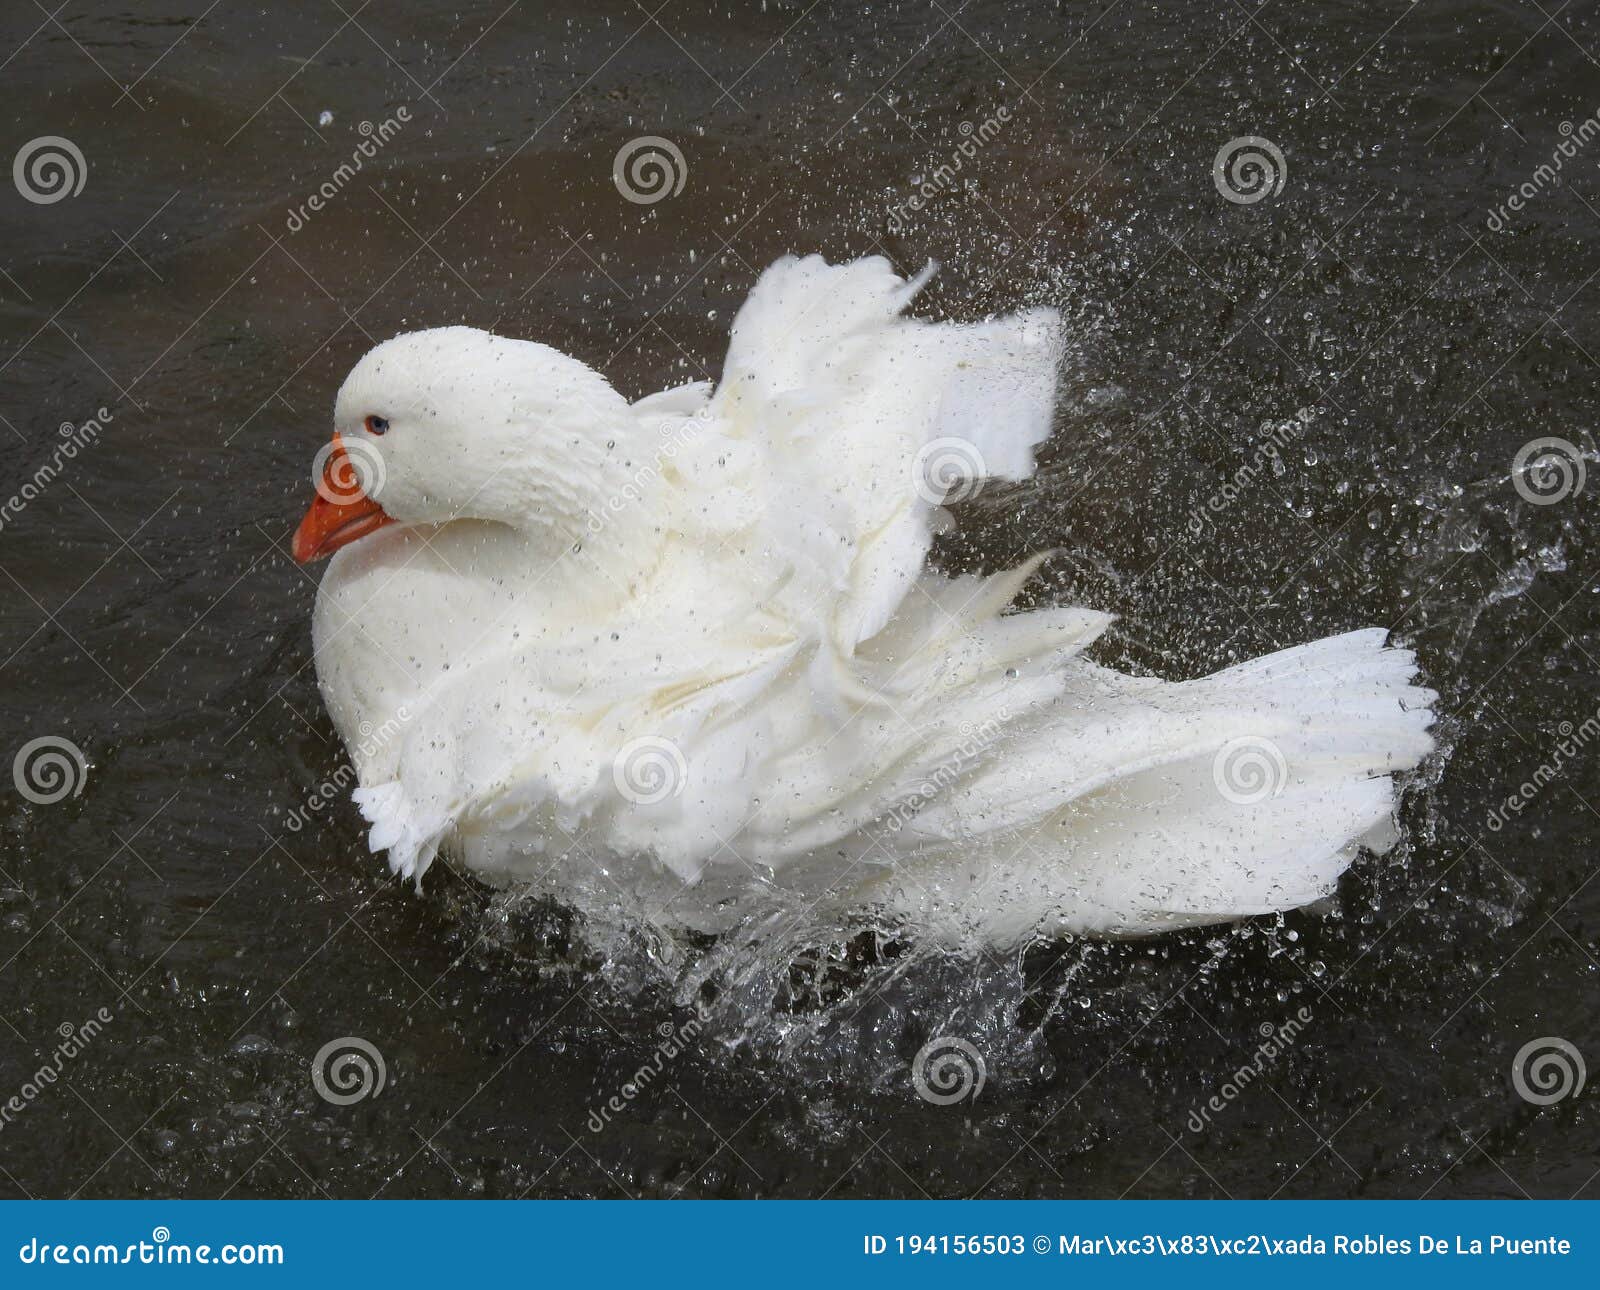 un cisne blanco refrescÃÂ¡ndose del calor